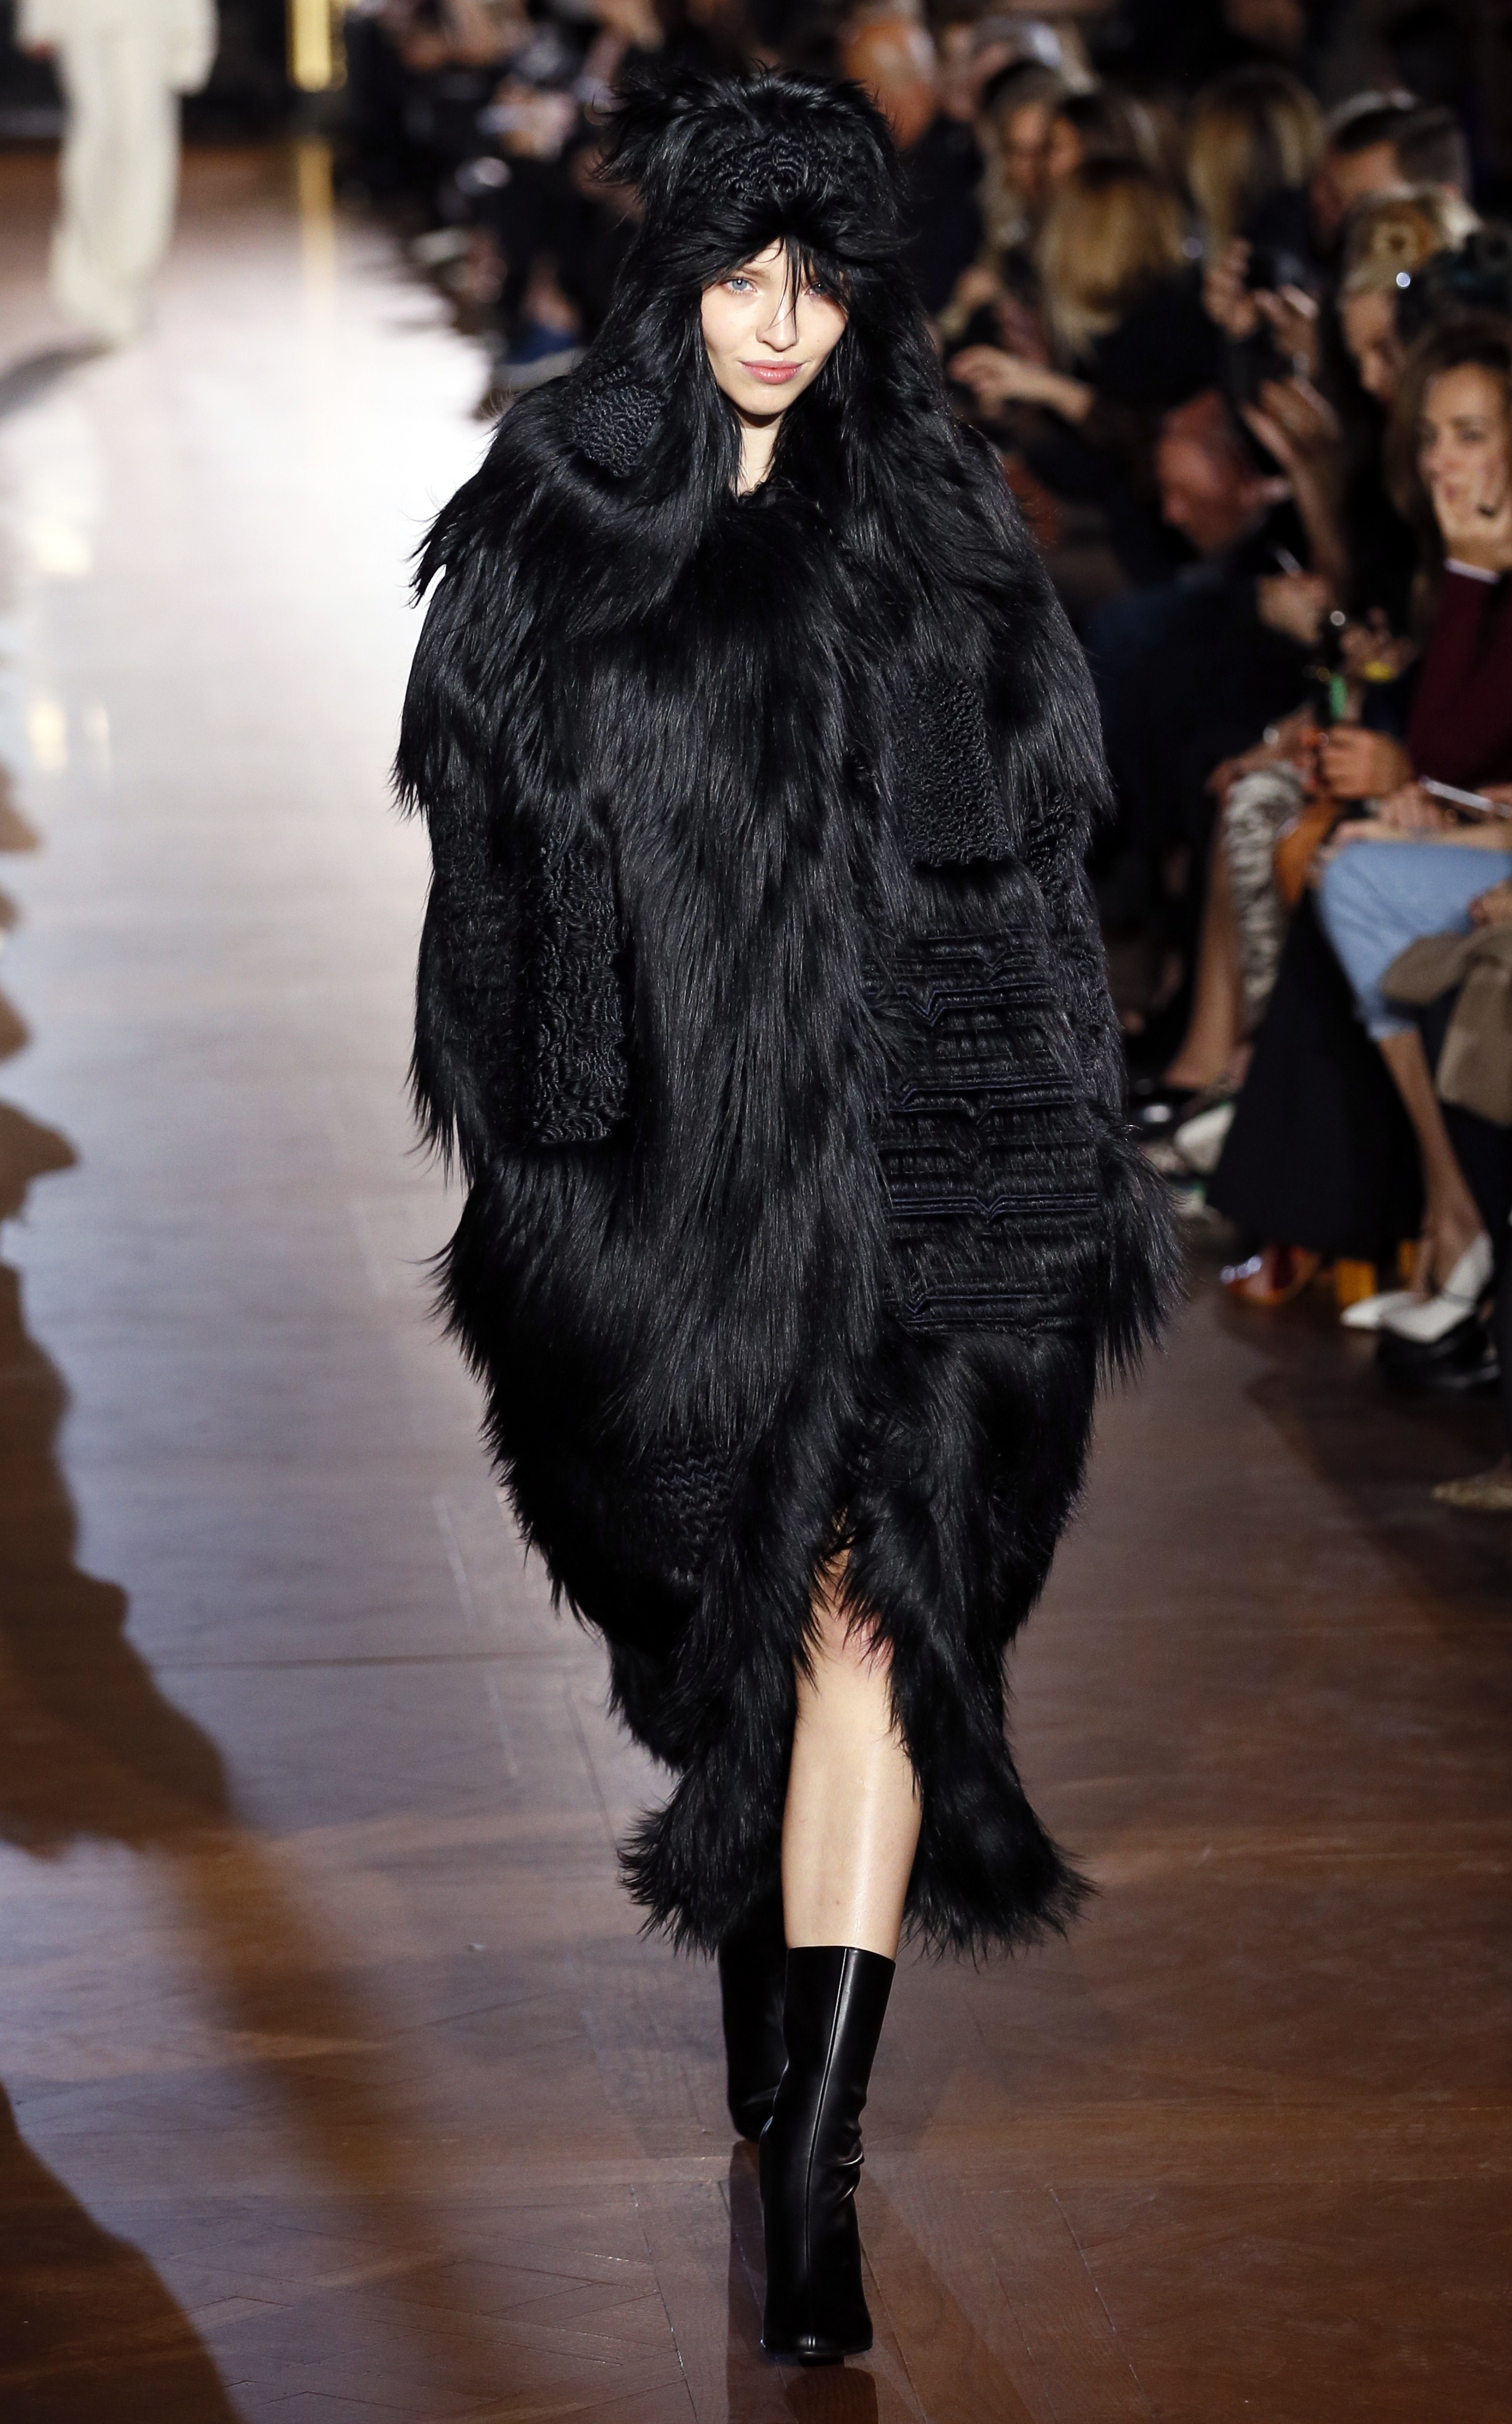 Chanel bans fur and animal skins - CNN Style